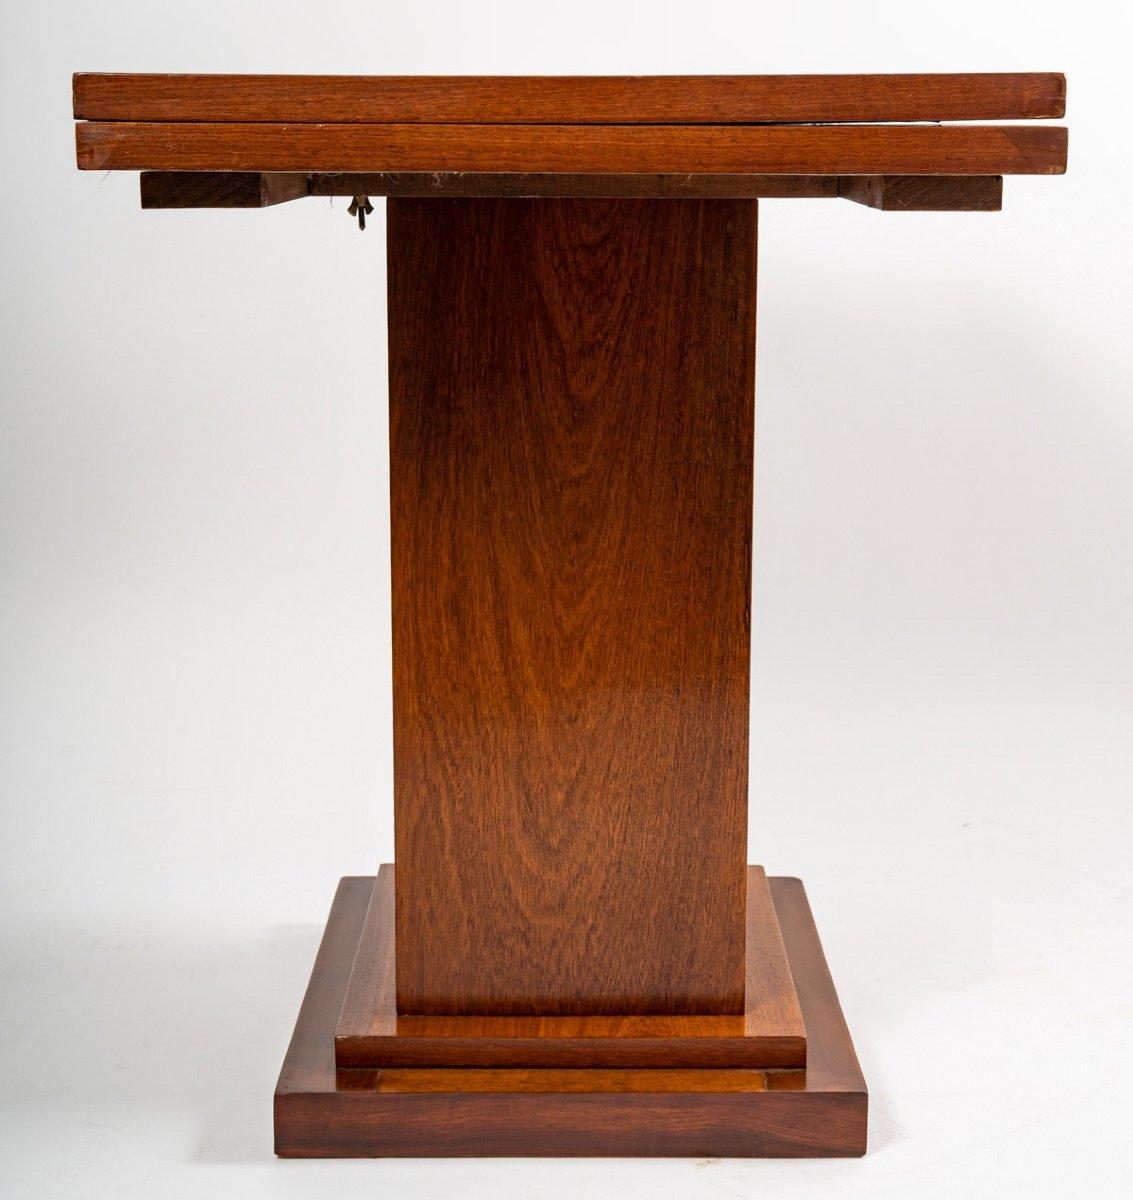 Walnut veneer games table mounted on oak, Art Deco style, 1925 - 1930
Measures: H: 73 cm, W: 85 cm, D: 55 cm.
Dimensions of open top: 110 x 110cm.